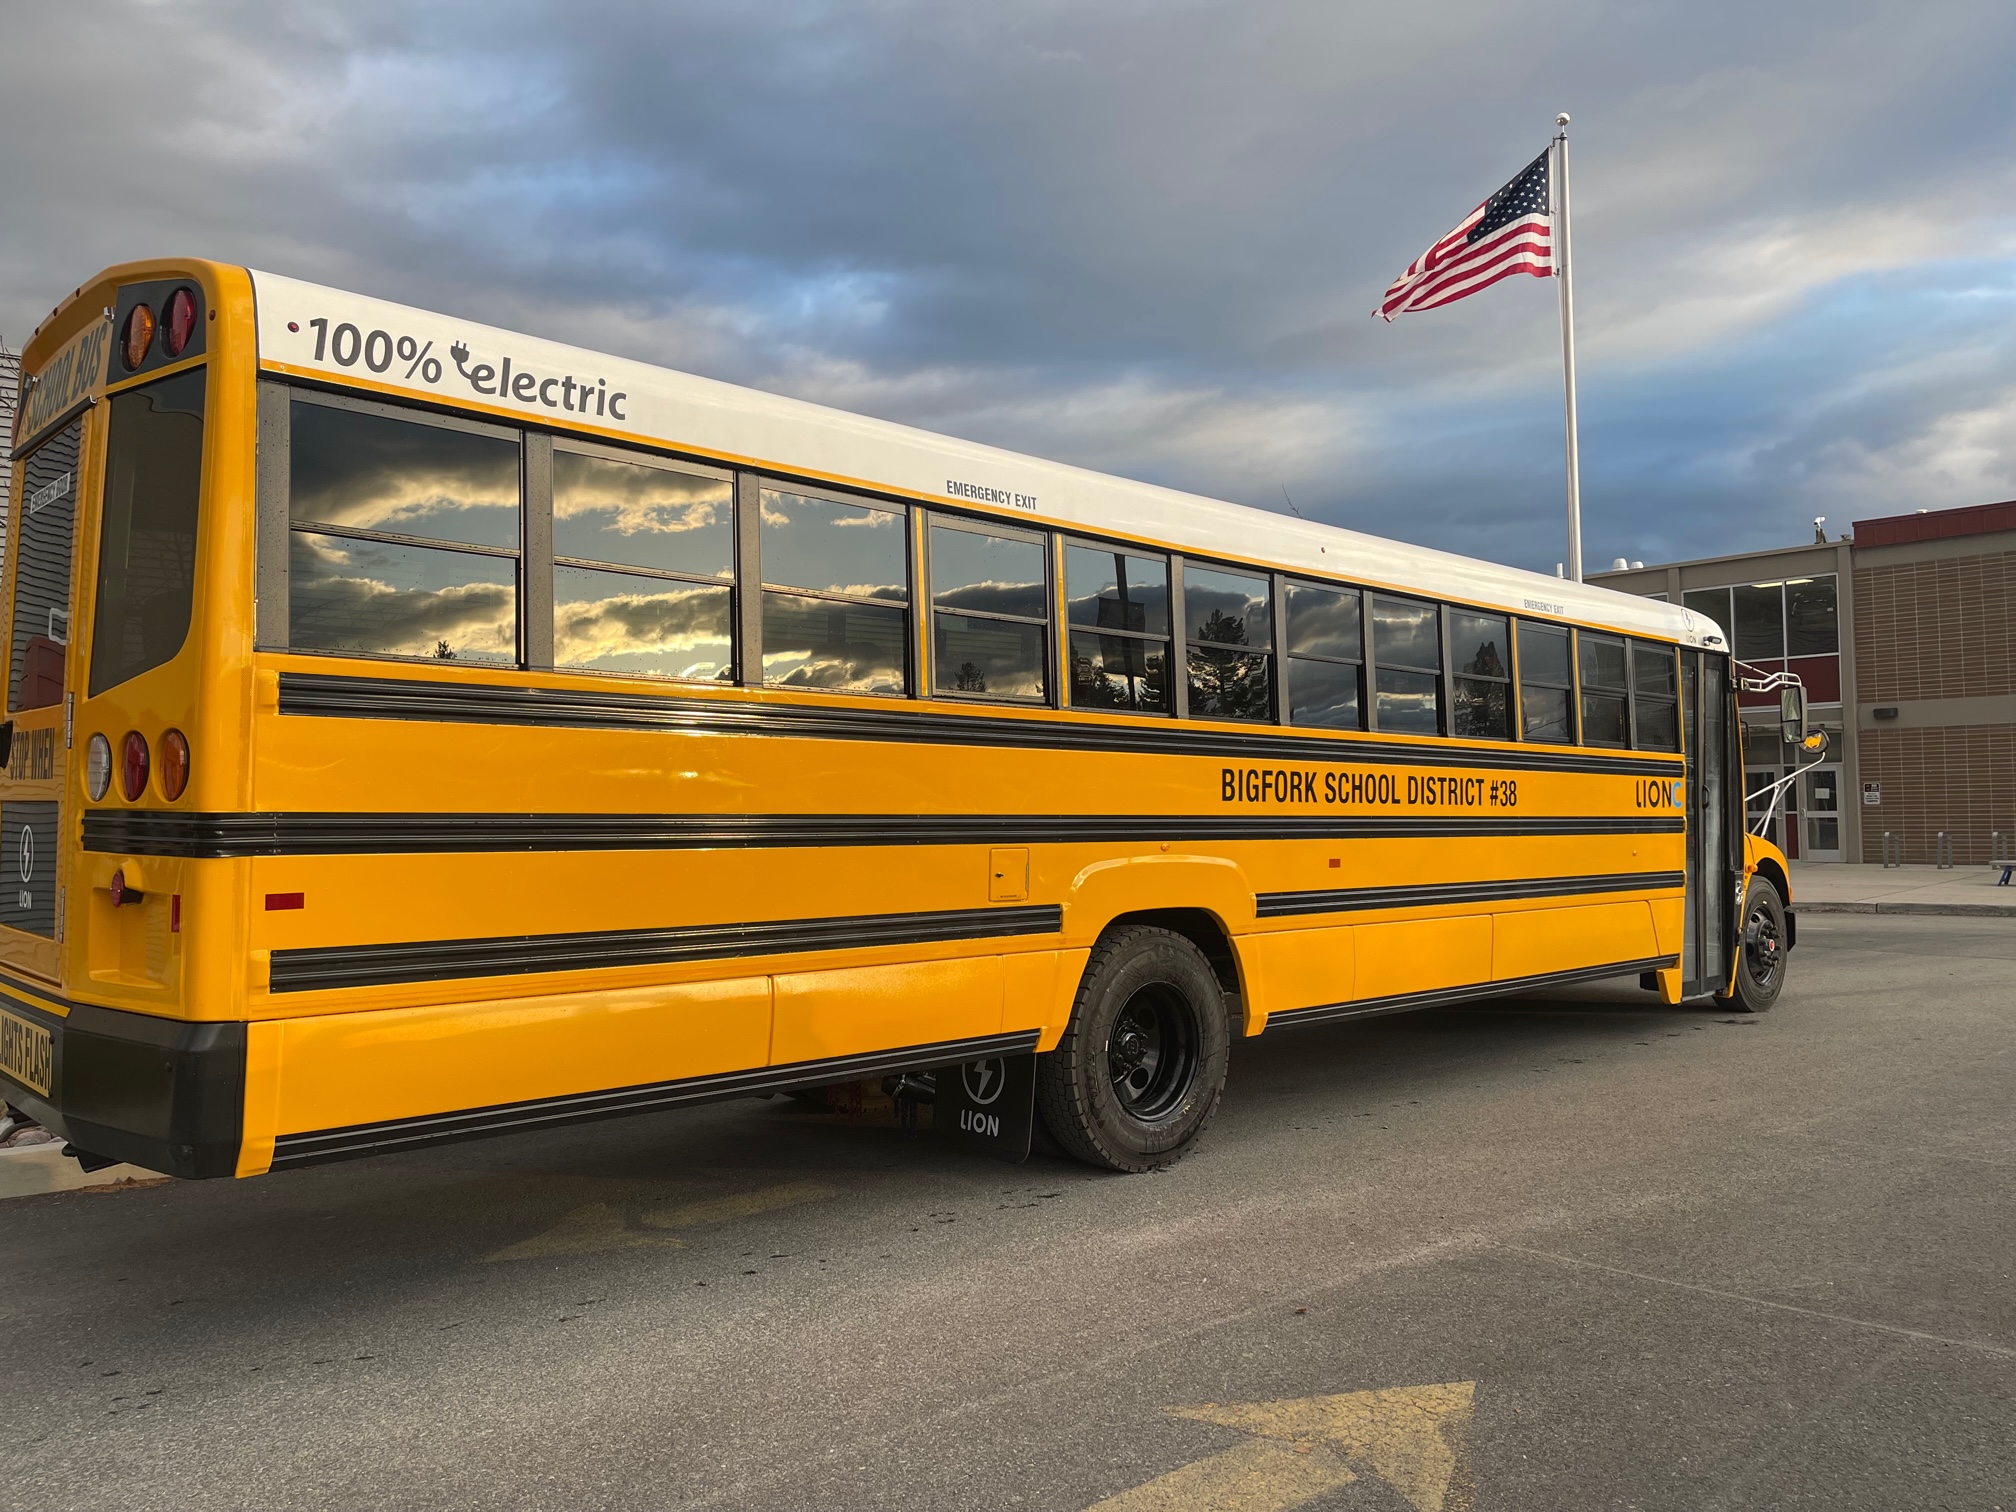 Bigfork Schools electric school bus parked in front of Bigfork high school